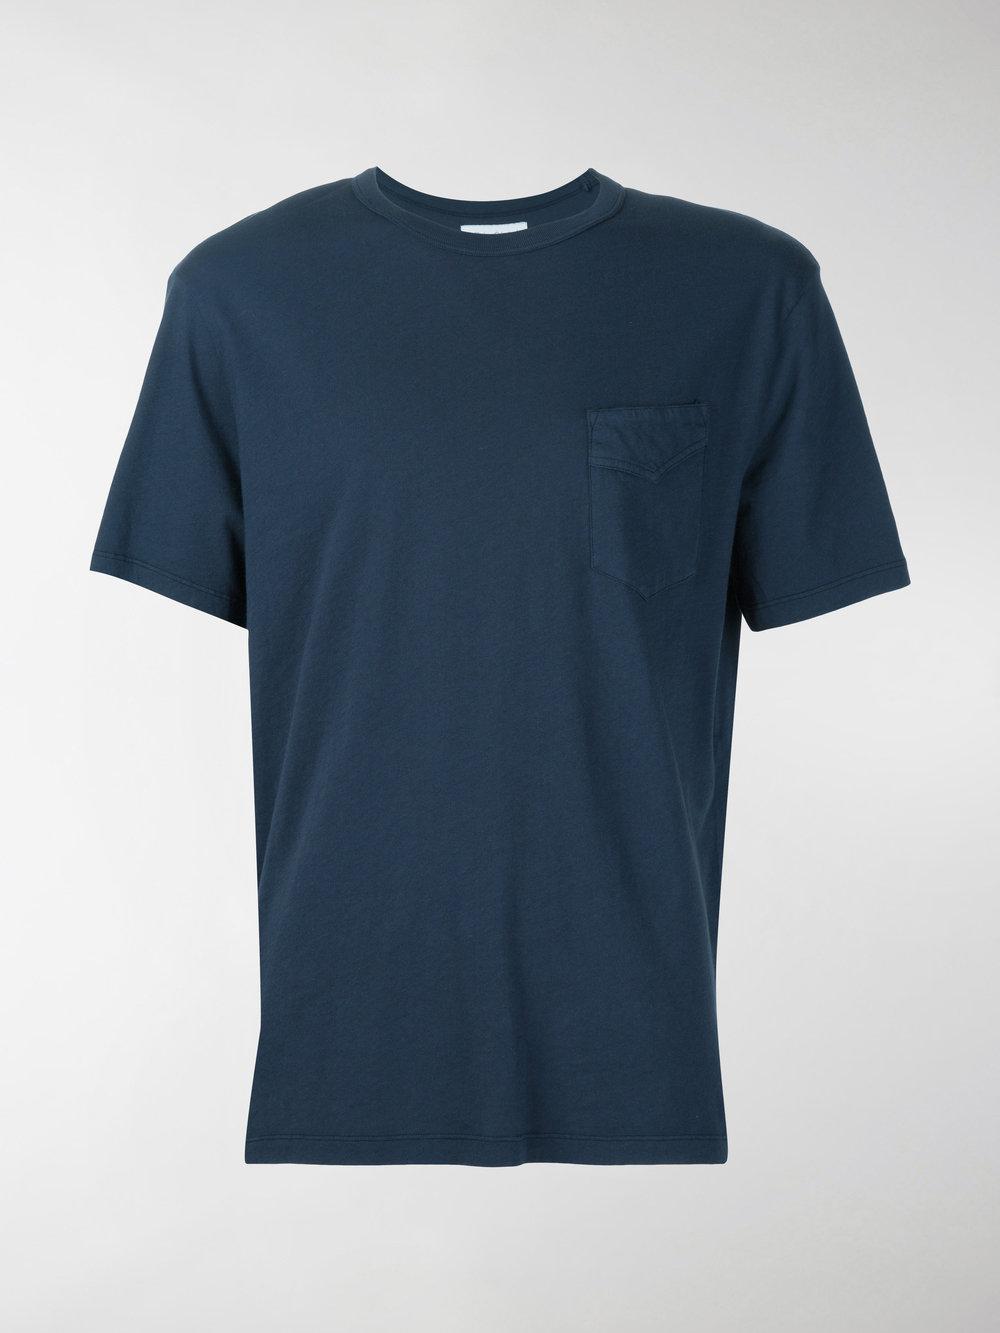 Officine Generale Cotton T-shirt Con Taschino in Blue for Men - Lyst